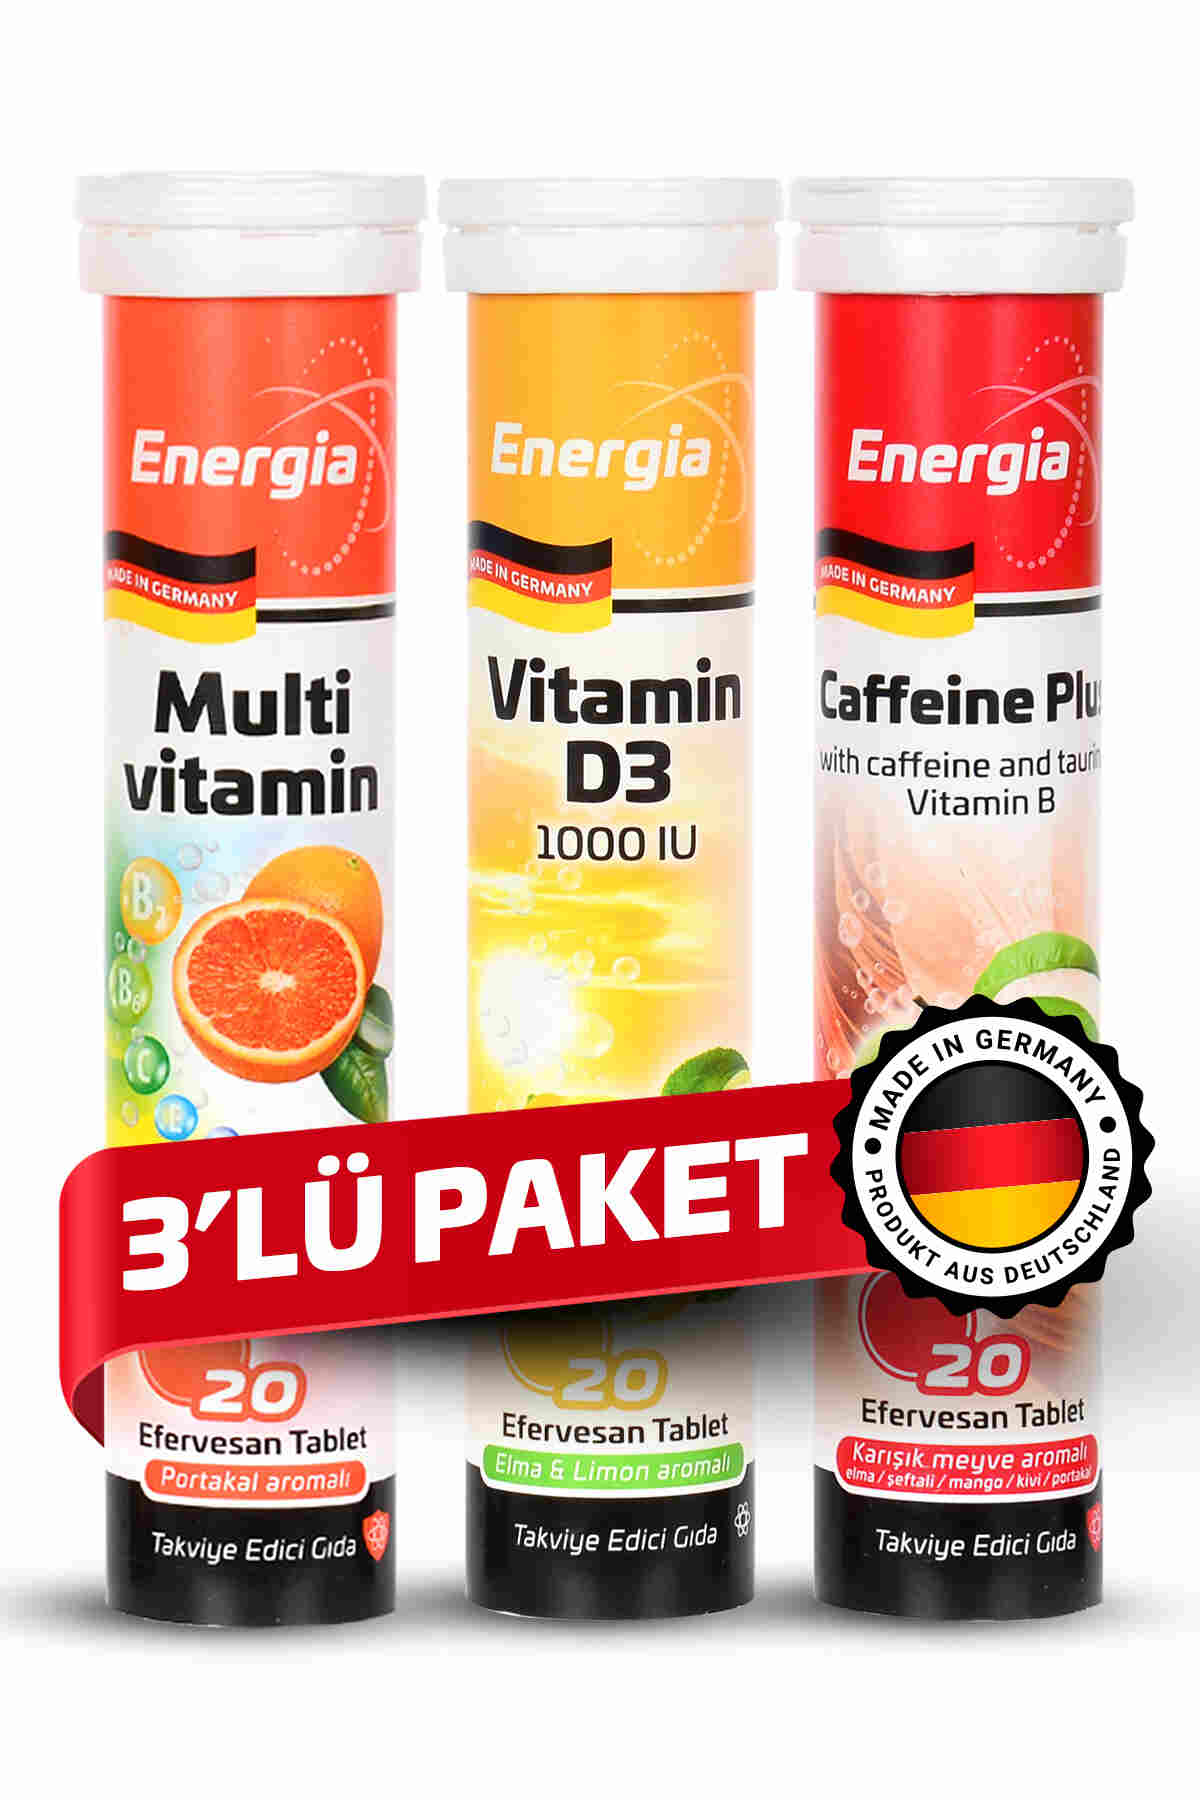 Energia® Multivitamin + Vitamin D + Caffeine Plus Efervesan Tablet Takviye Edici Gıda